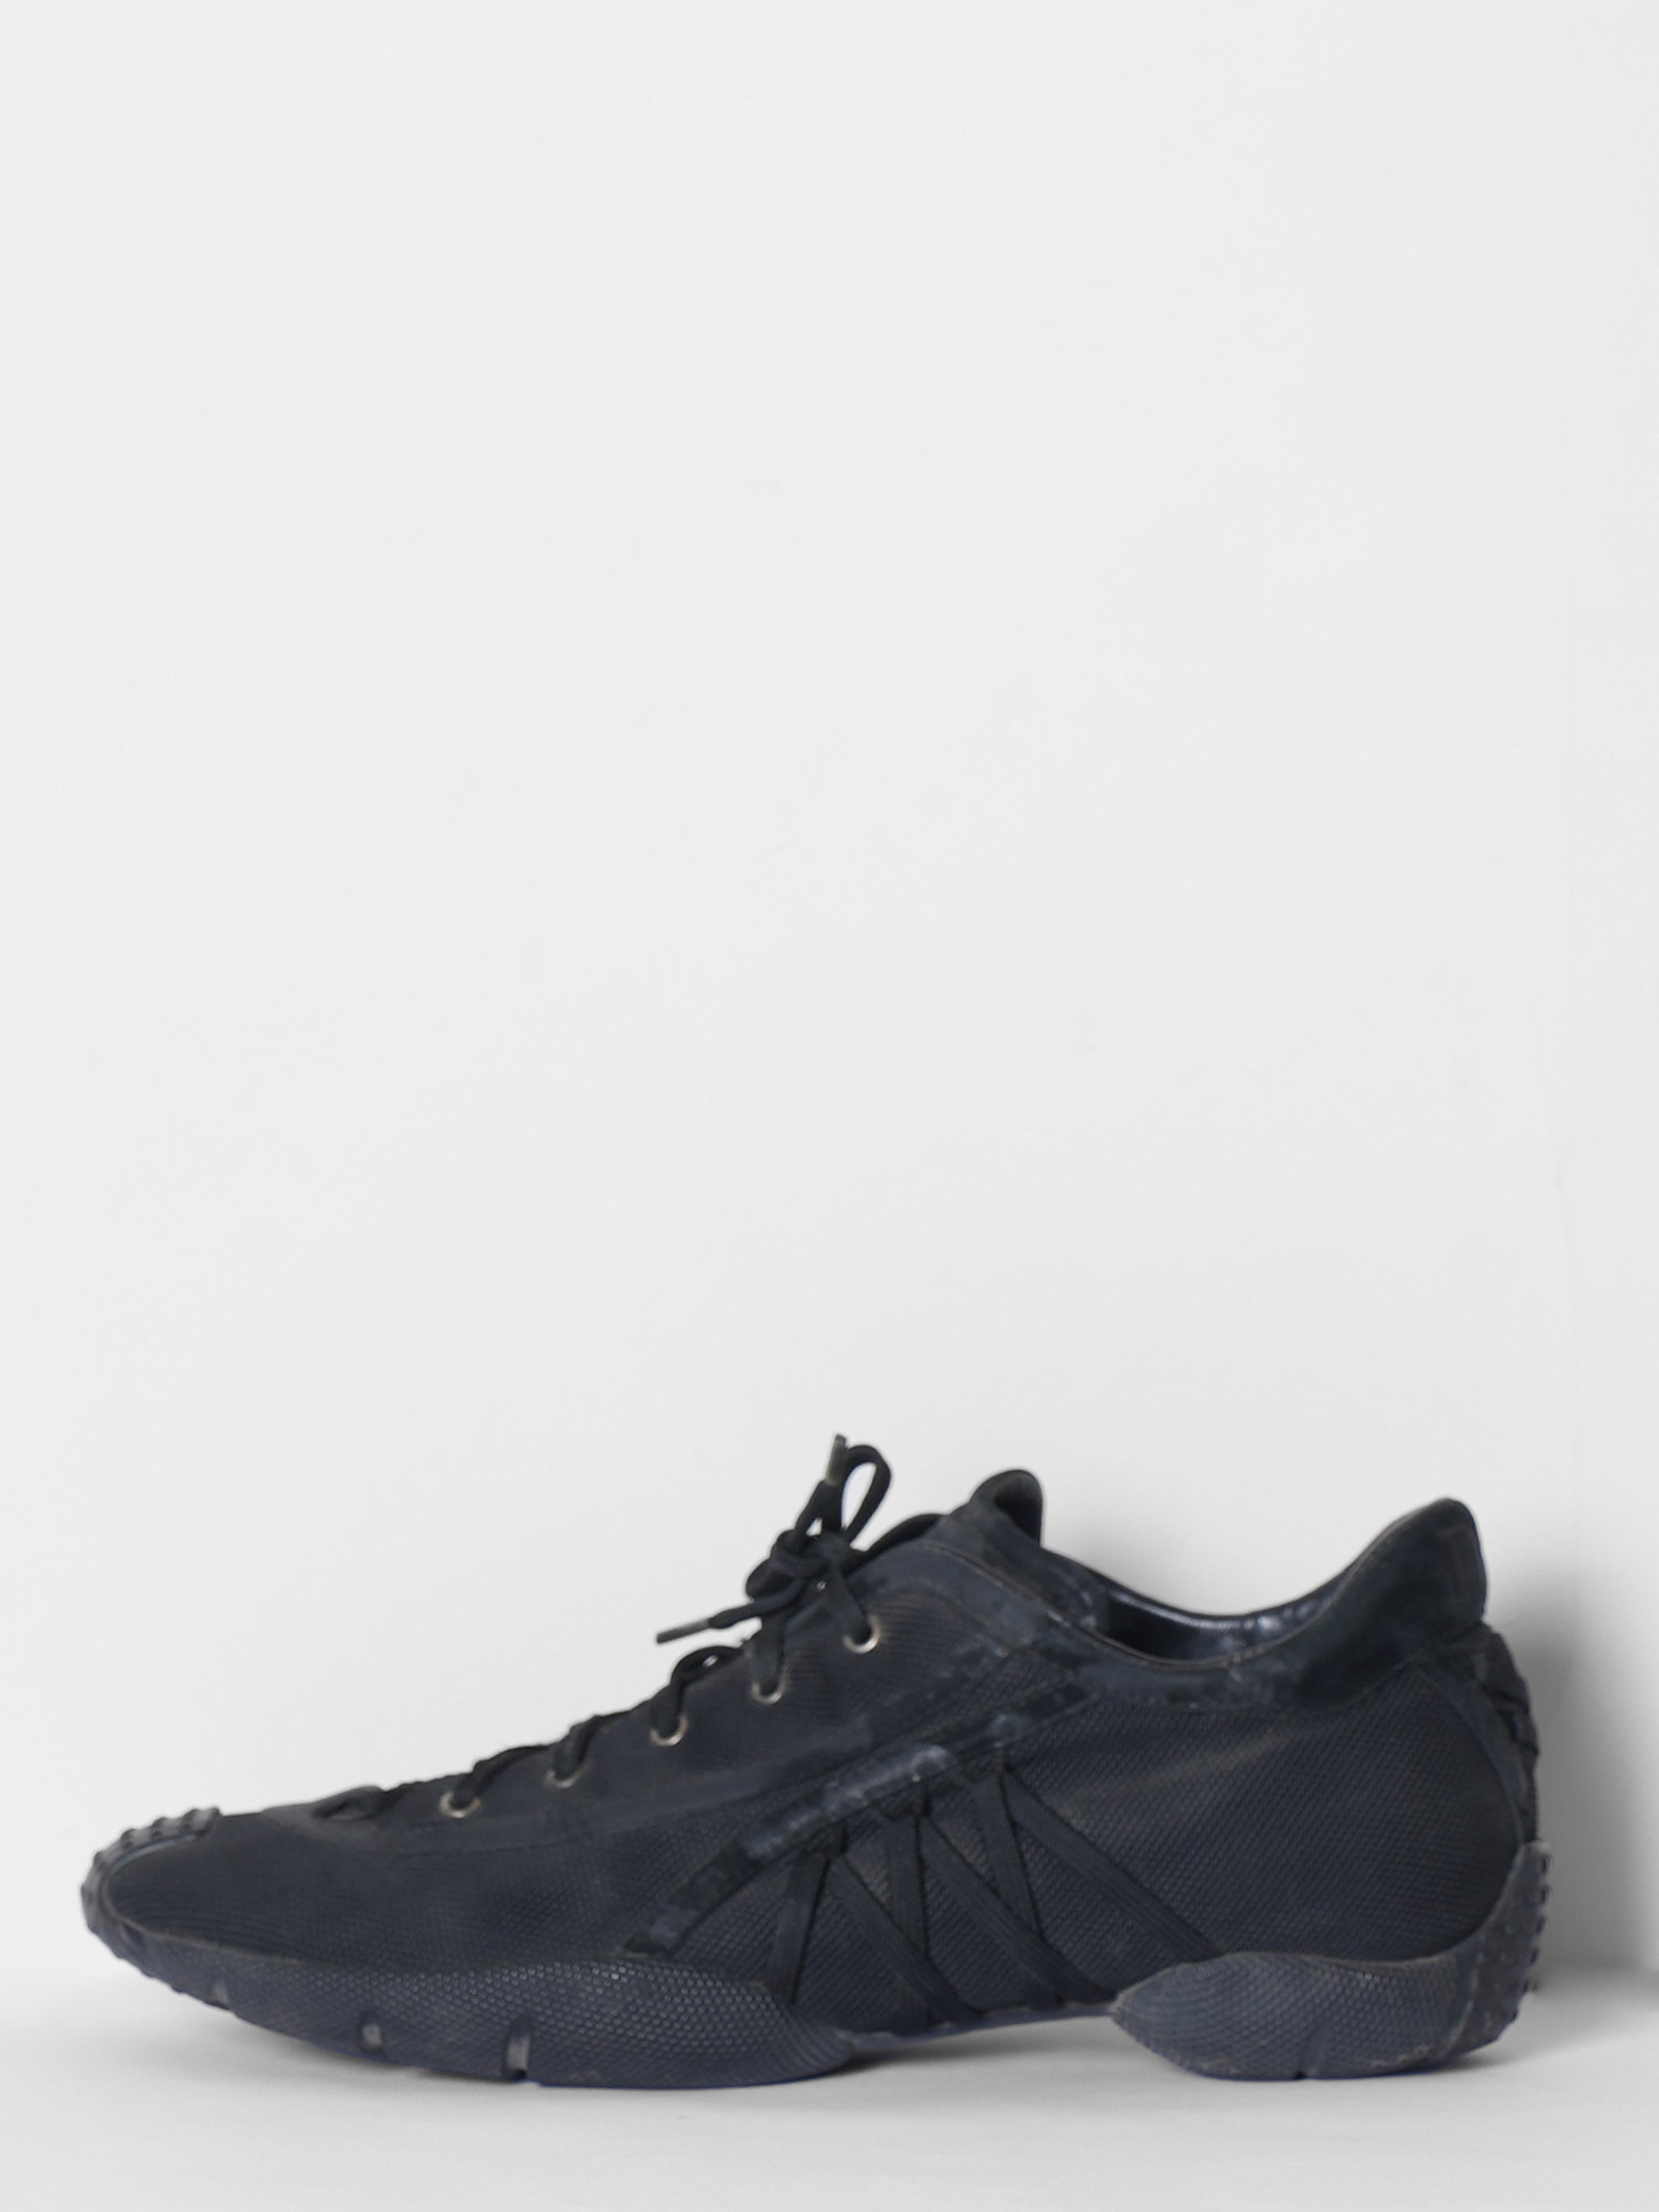 Dior Black Shoes